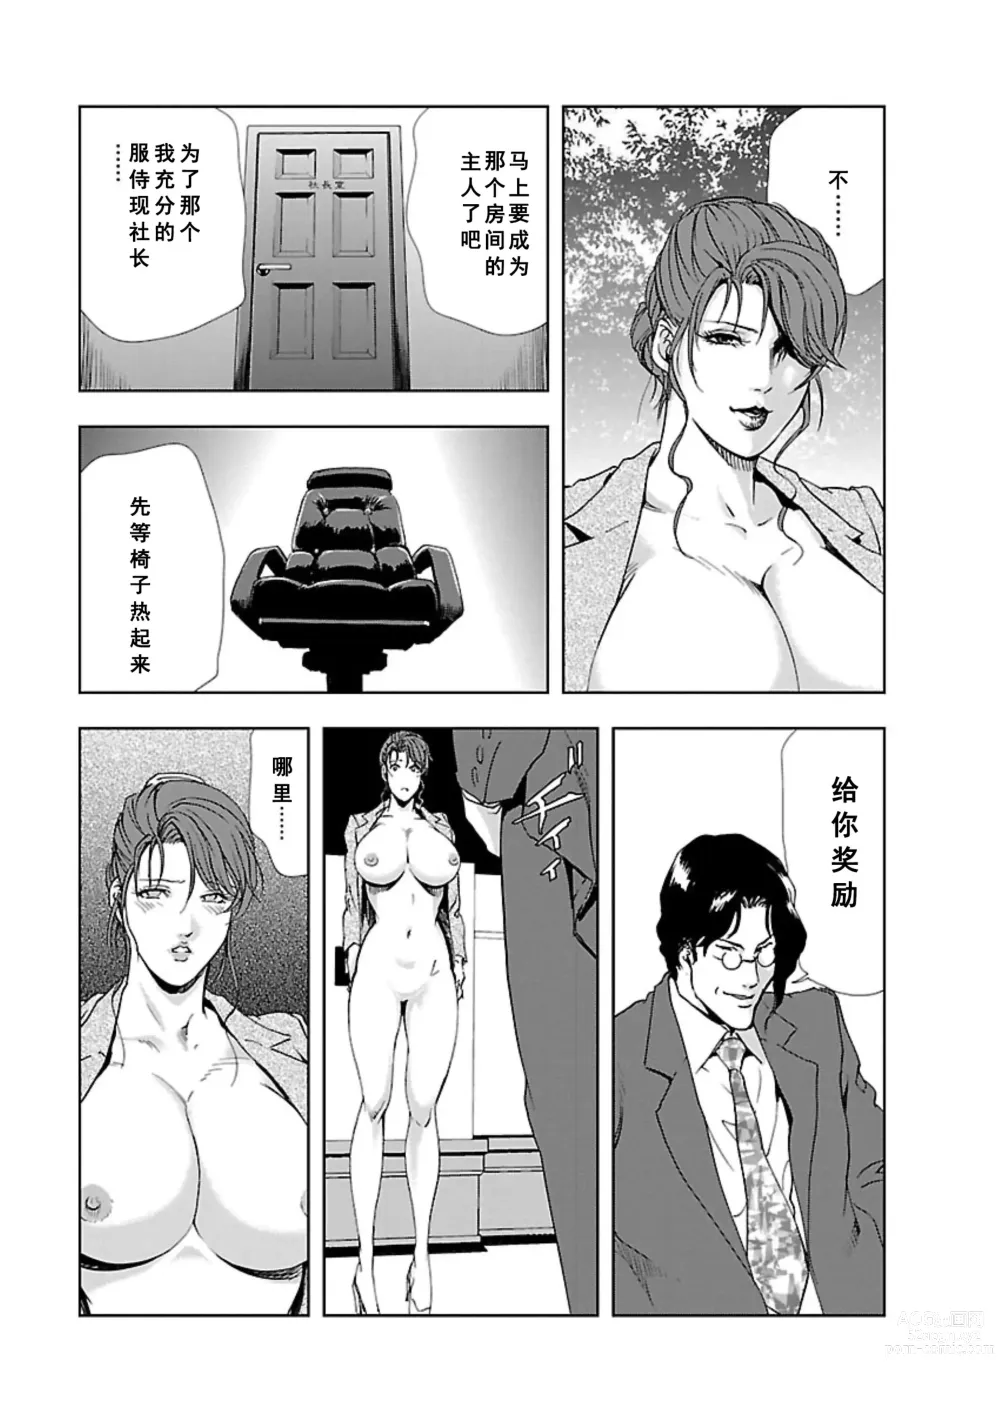 Page 144 of manga Nikuhisyo Yukiko Vol.01